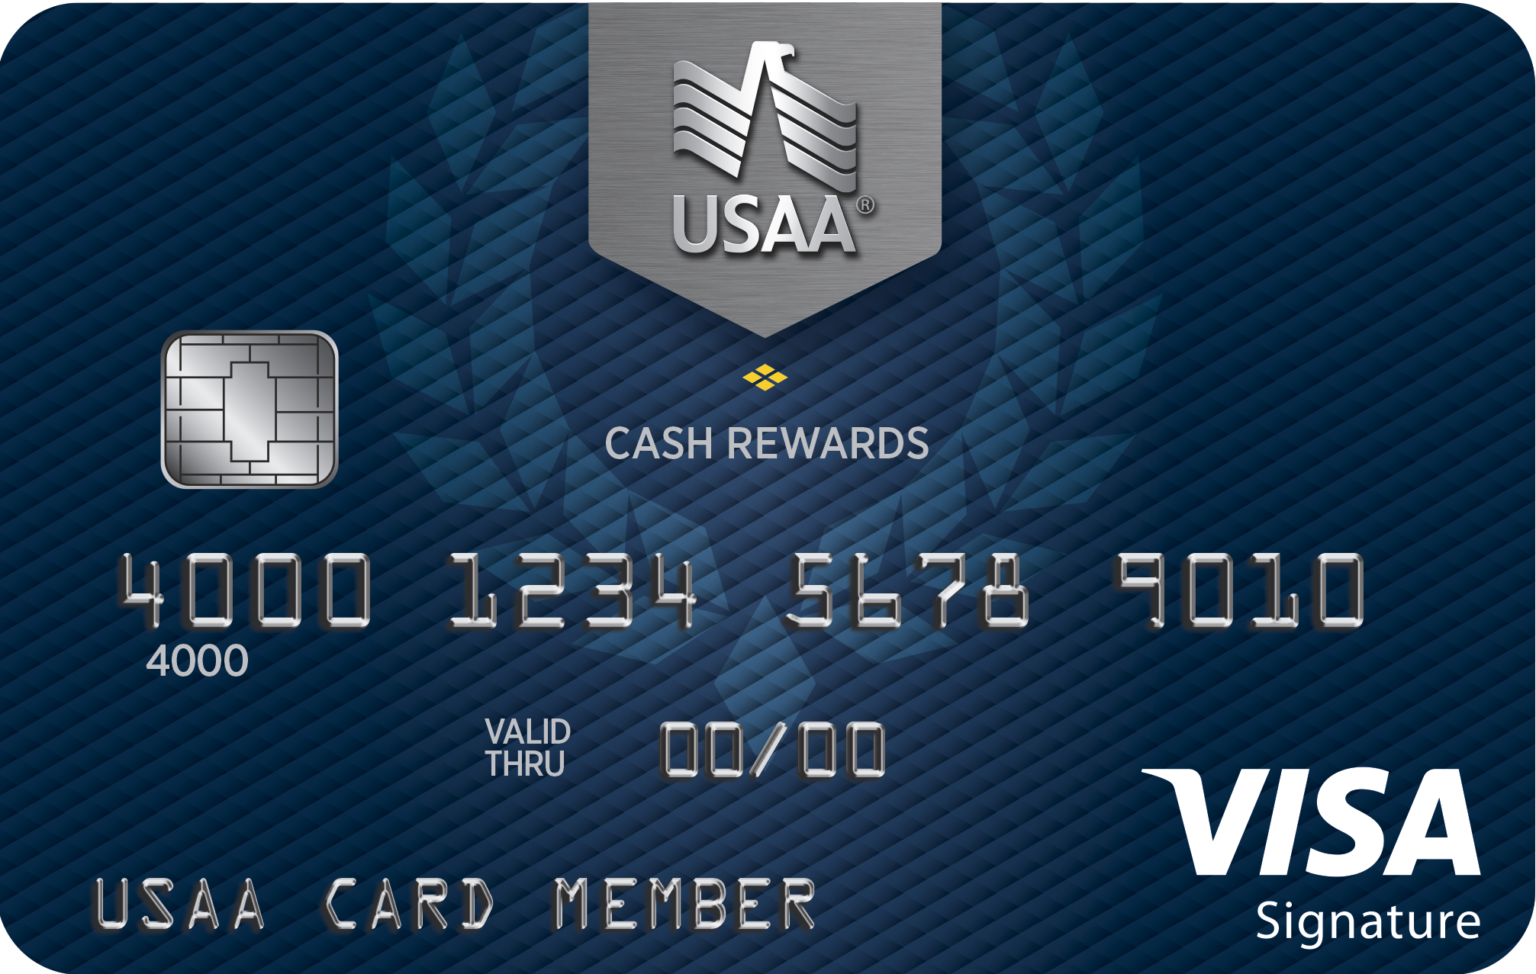 USAA Credit Cards & Rewards Program Detailed [2022]